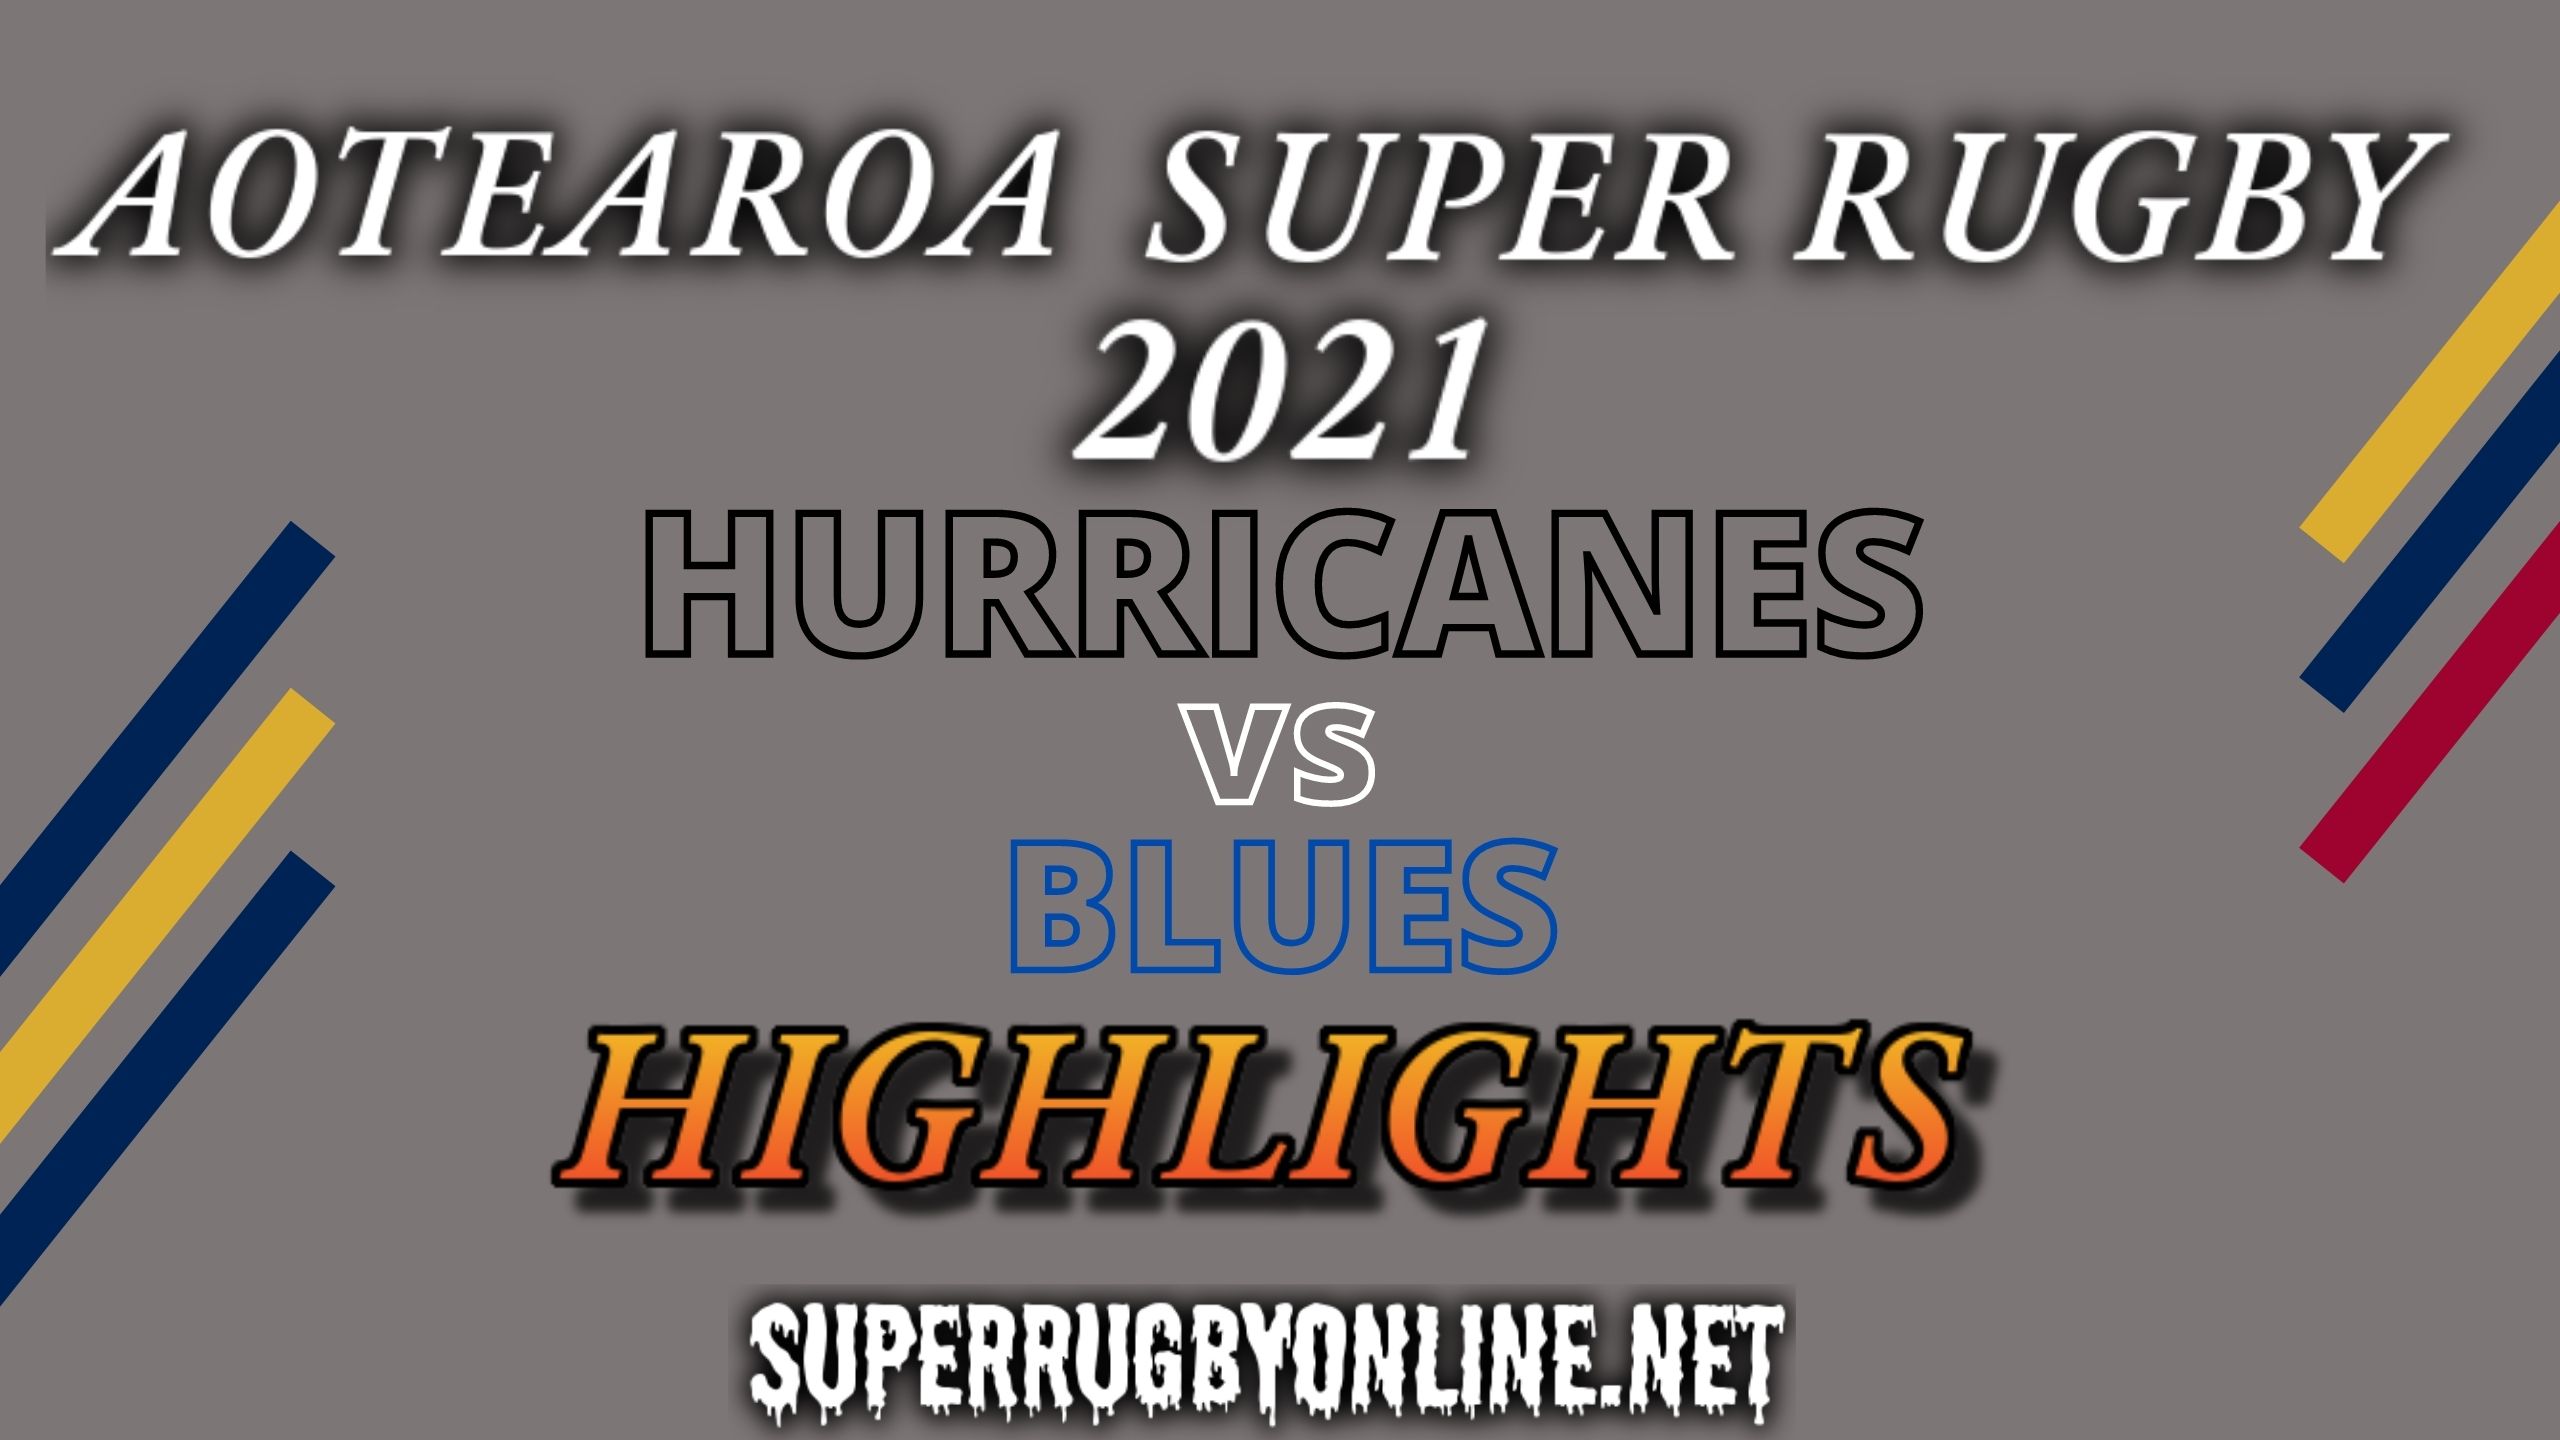 Hurricanes Vs Blues Rd 1 Highlights 2021 Aotearoa Rugby